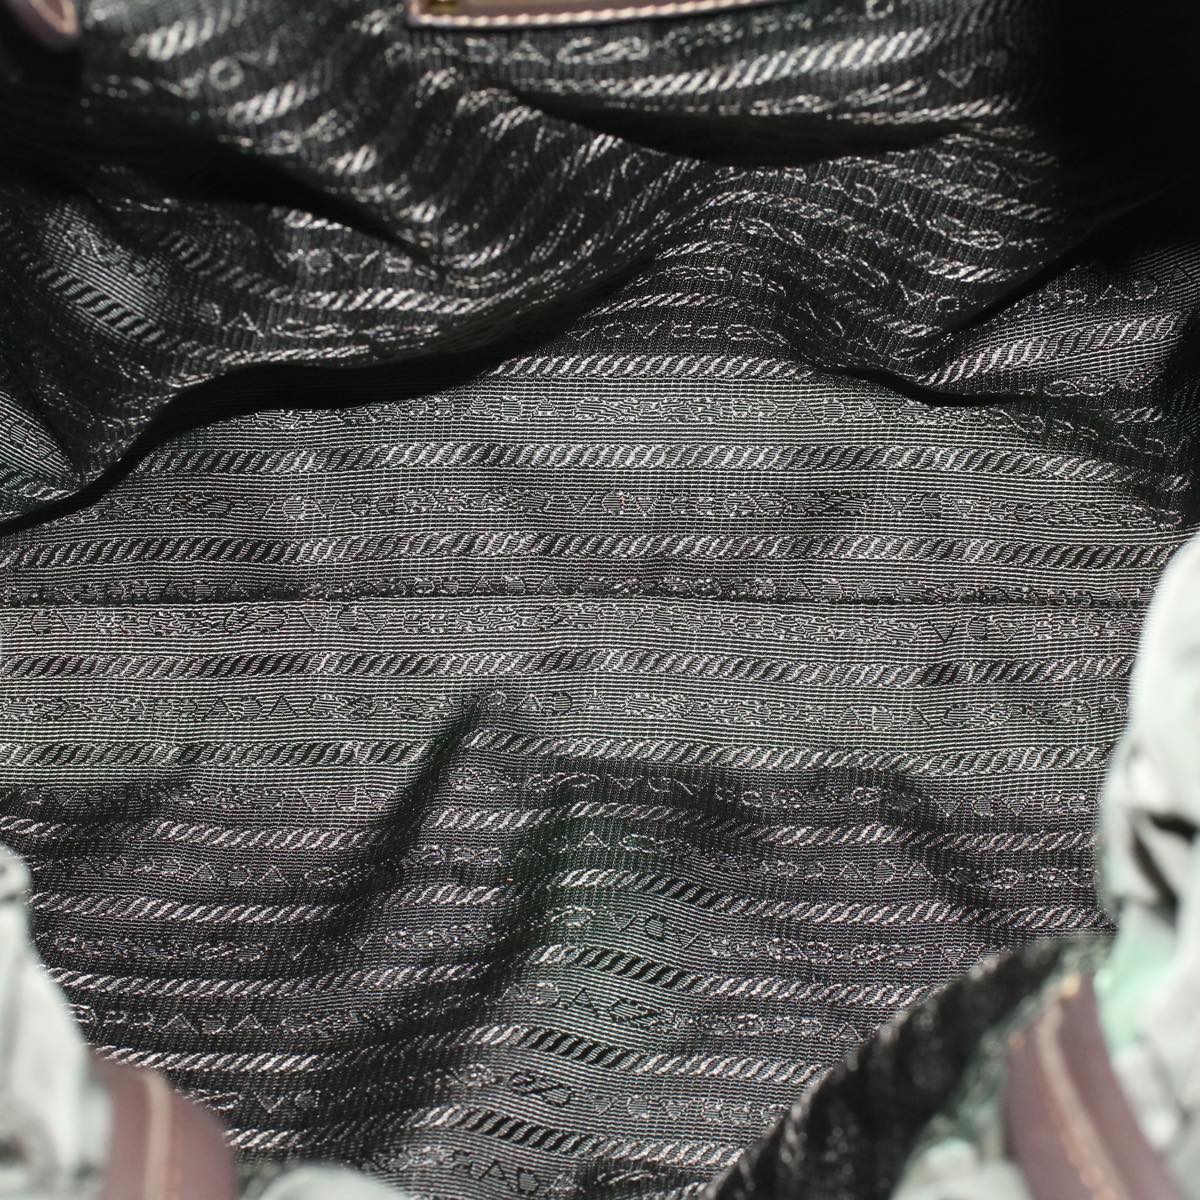 PRADA Shoulder Bag Nylon Khaki Auth ep1672